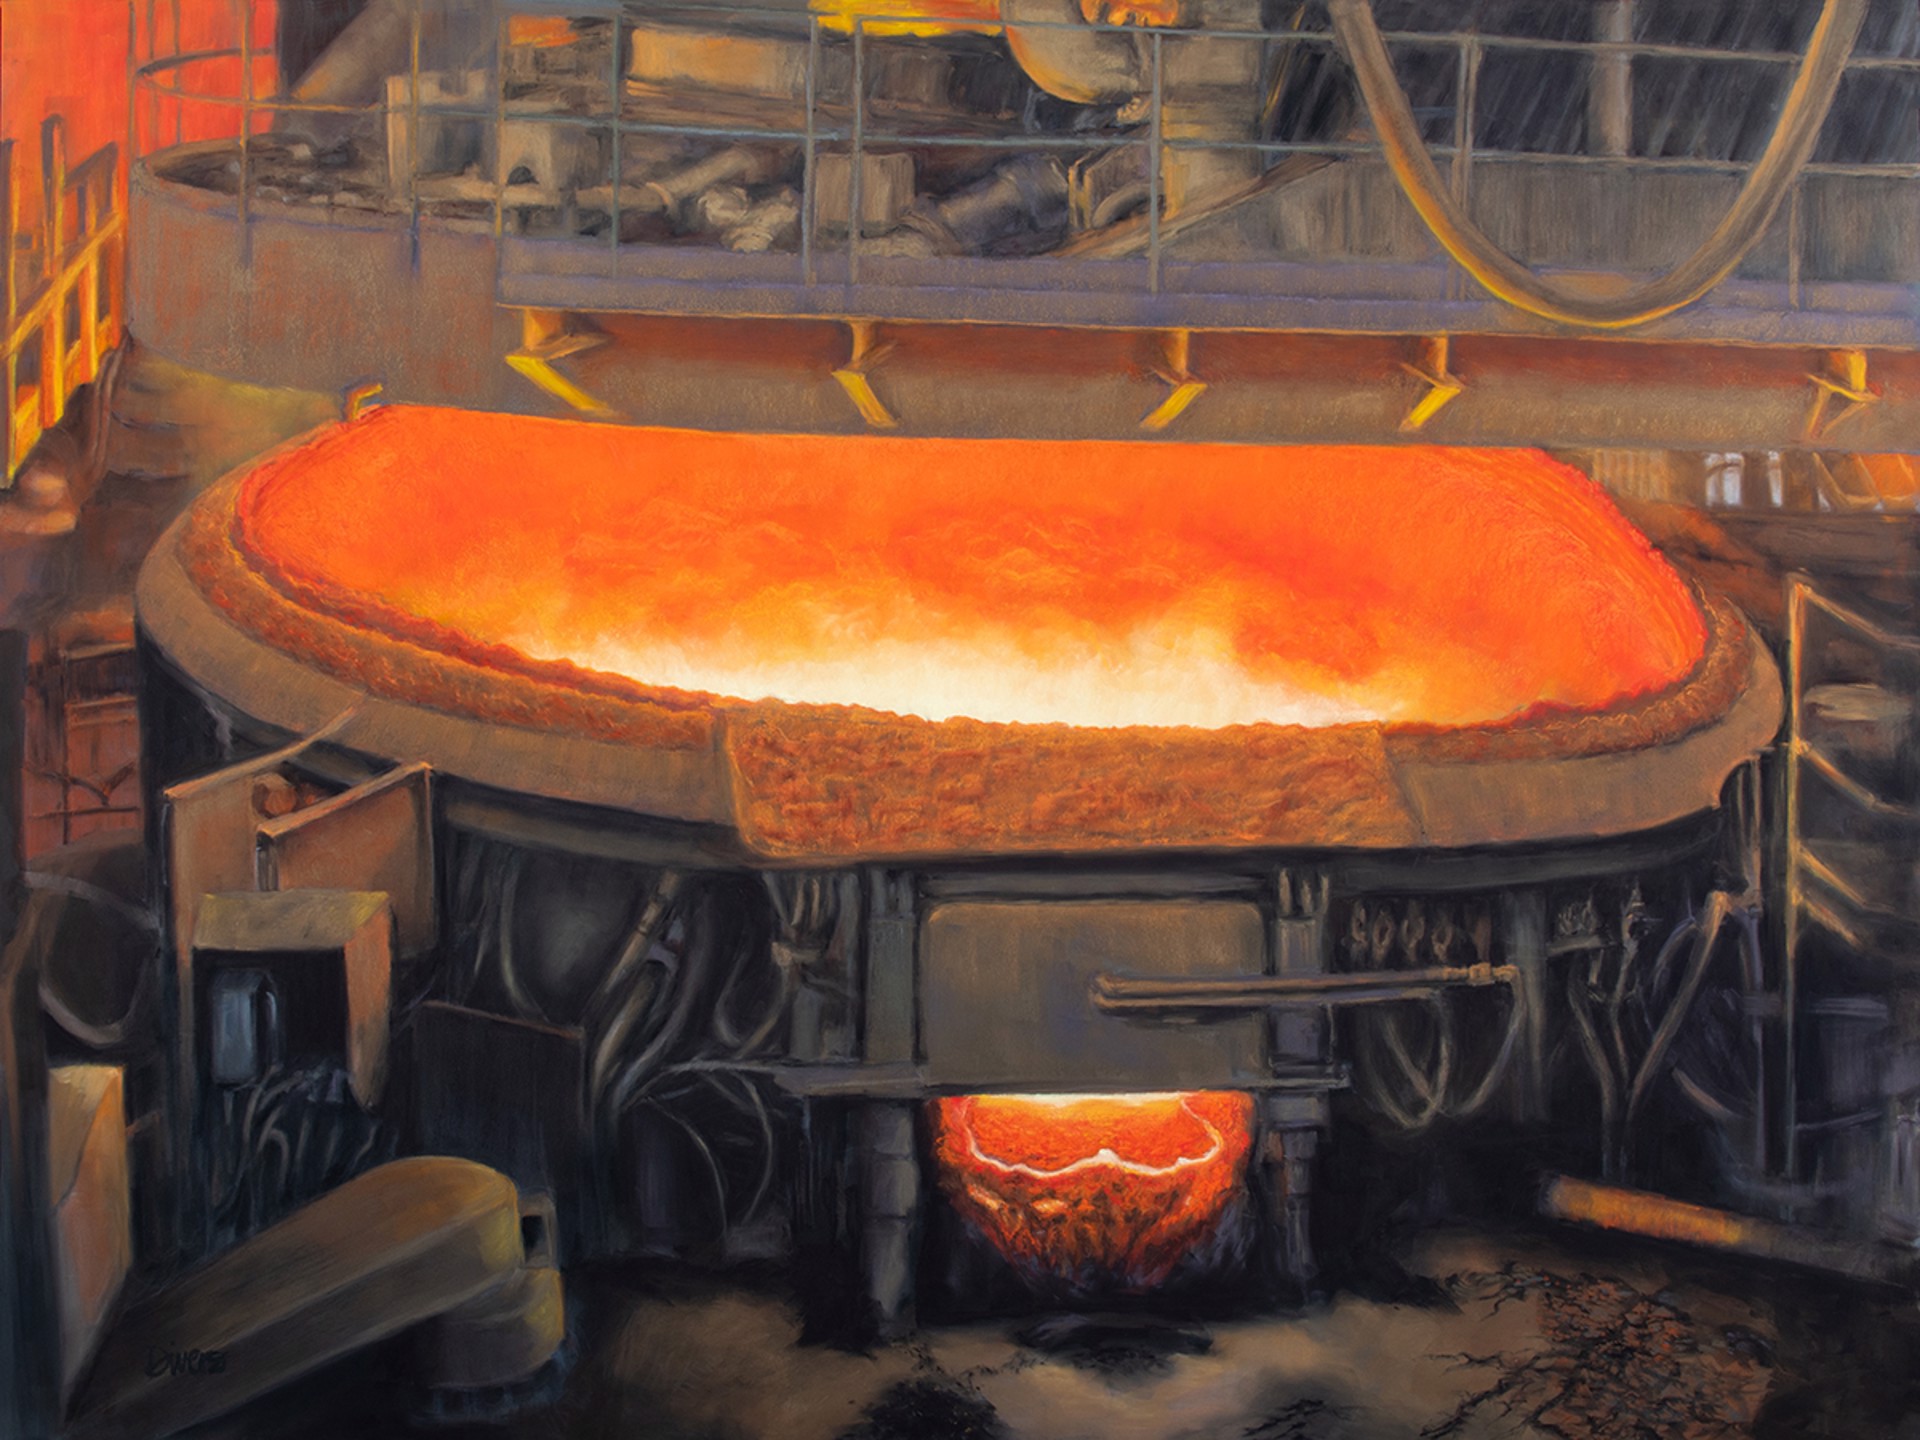 Fiery Furnace by Kristin Divers